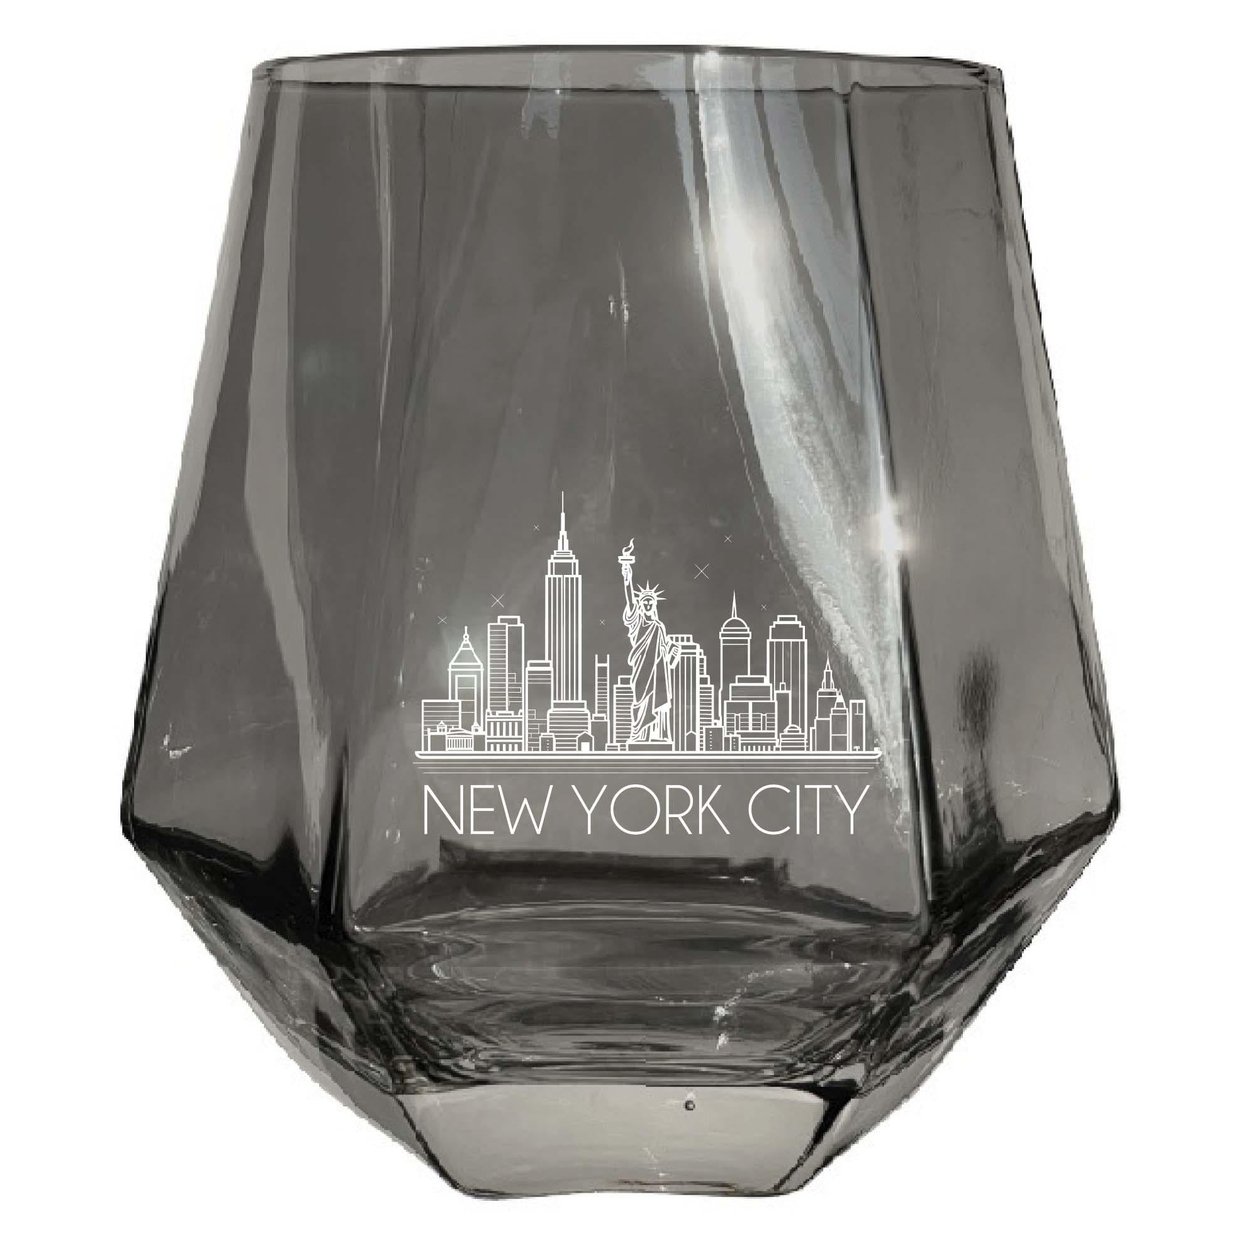 New York City Souvenir Wine Glass EngravedDiamond 15 Oz - Gray,,2-Pack